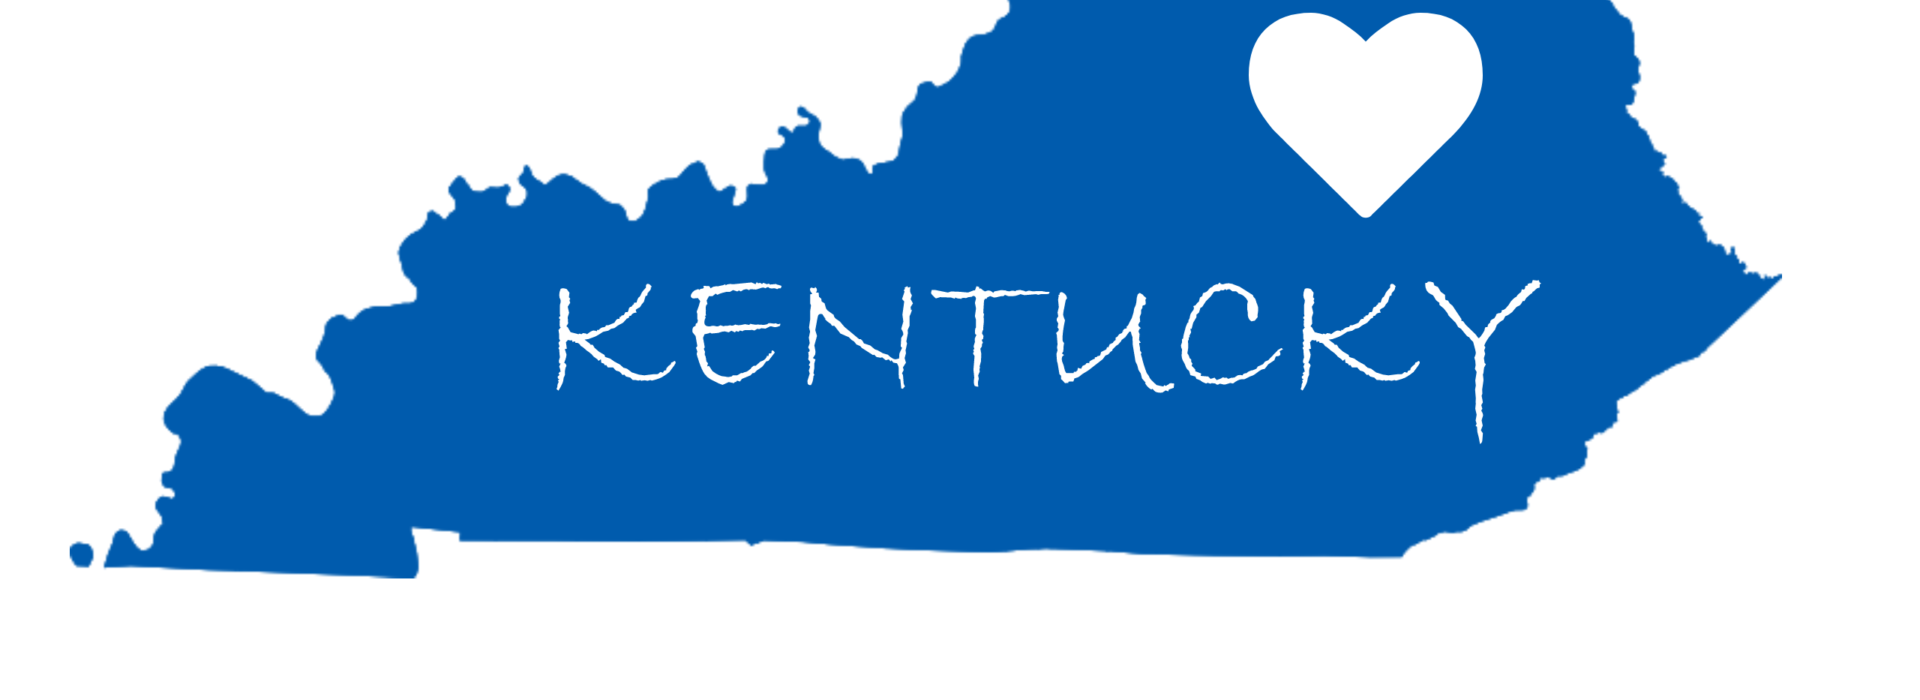 Kentucky map with heart